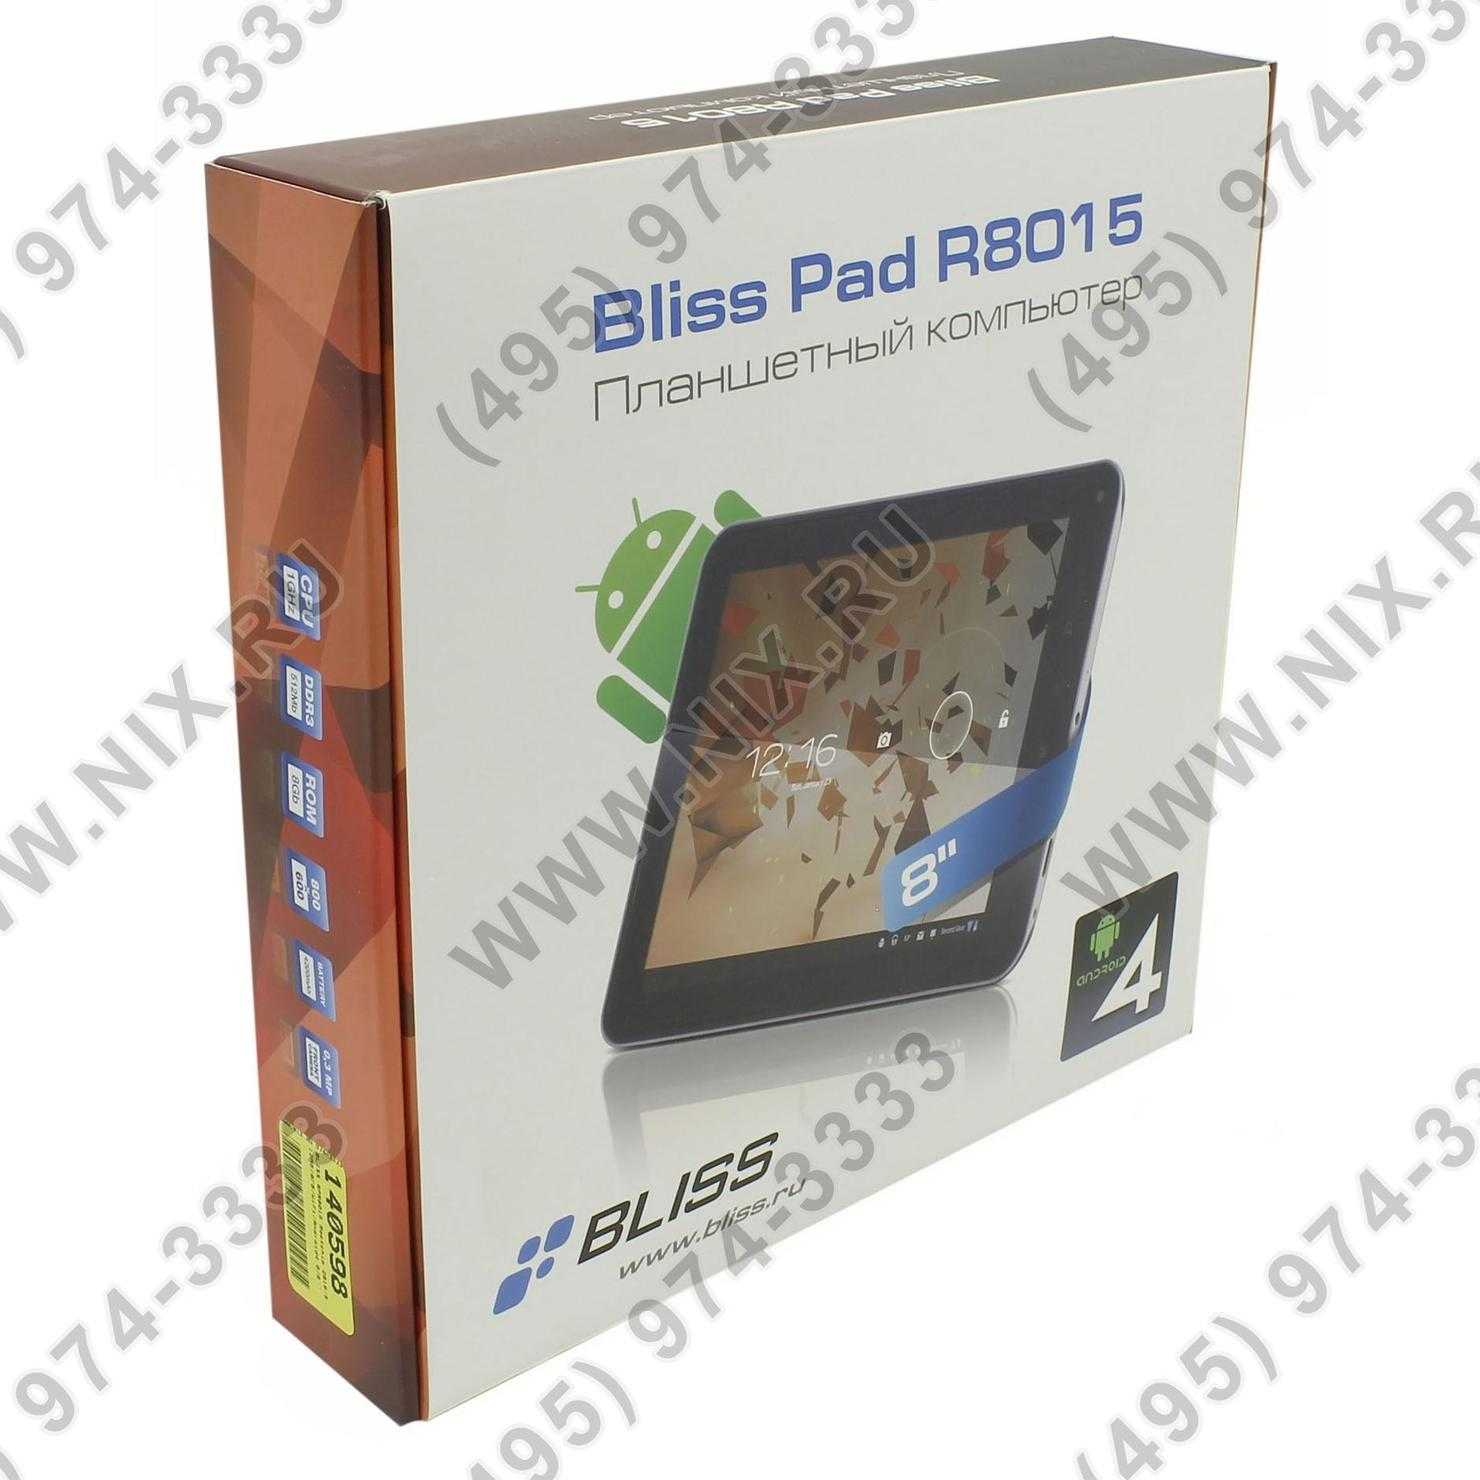 Bliss pad r8015 - описание, характеристики, тест, отзывы, цены, фото